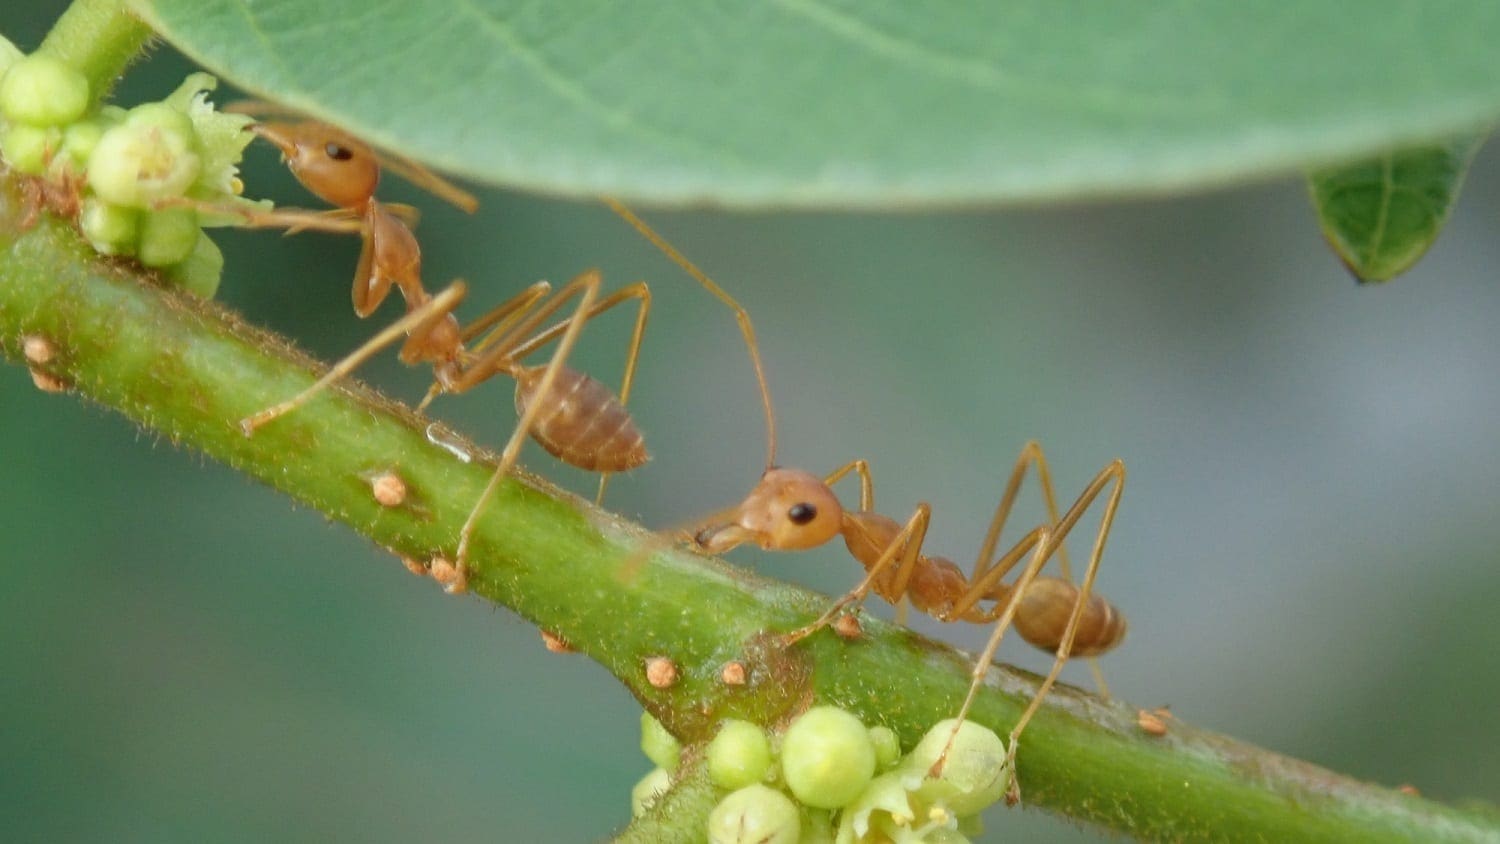 Translucent brown ants on a green stem: Photo 134021905 © Aaron Lee | Dreamstime.com